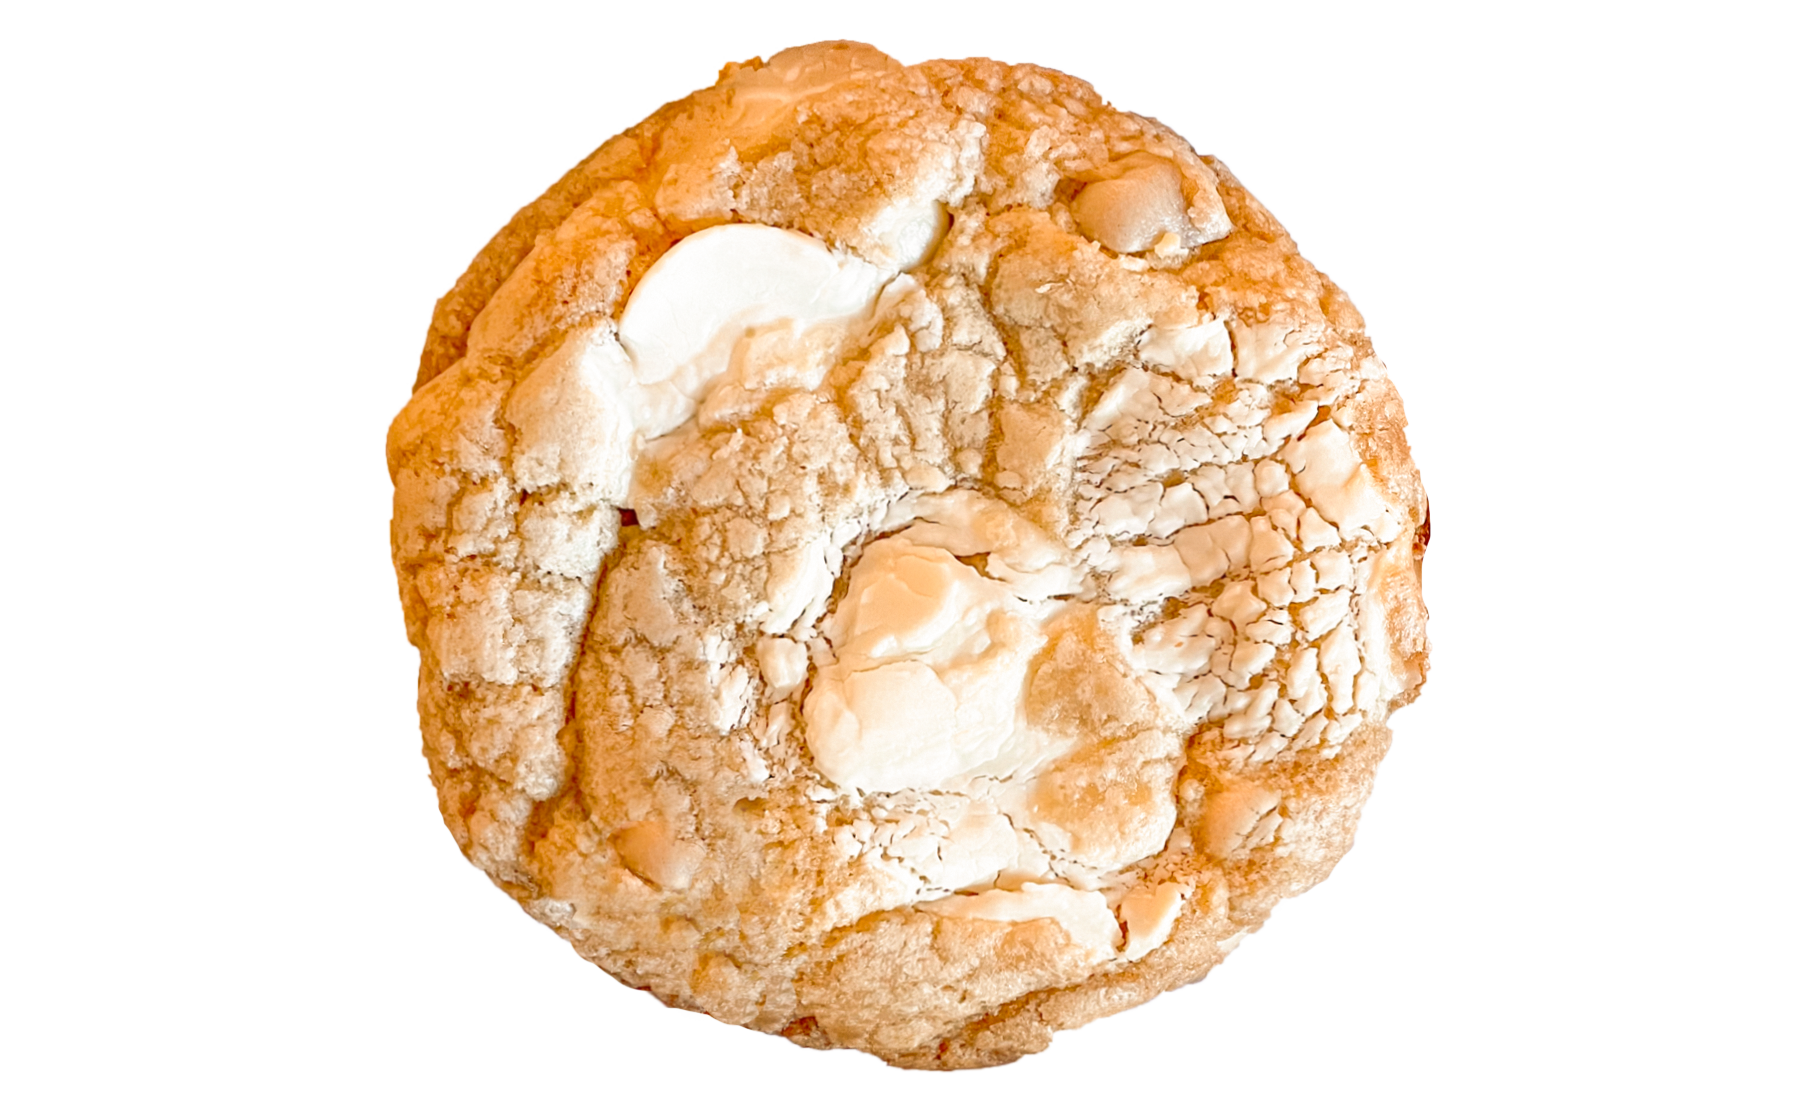 macadamia nut cookie with white chocolate